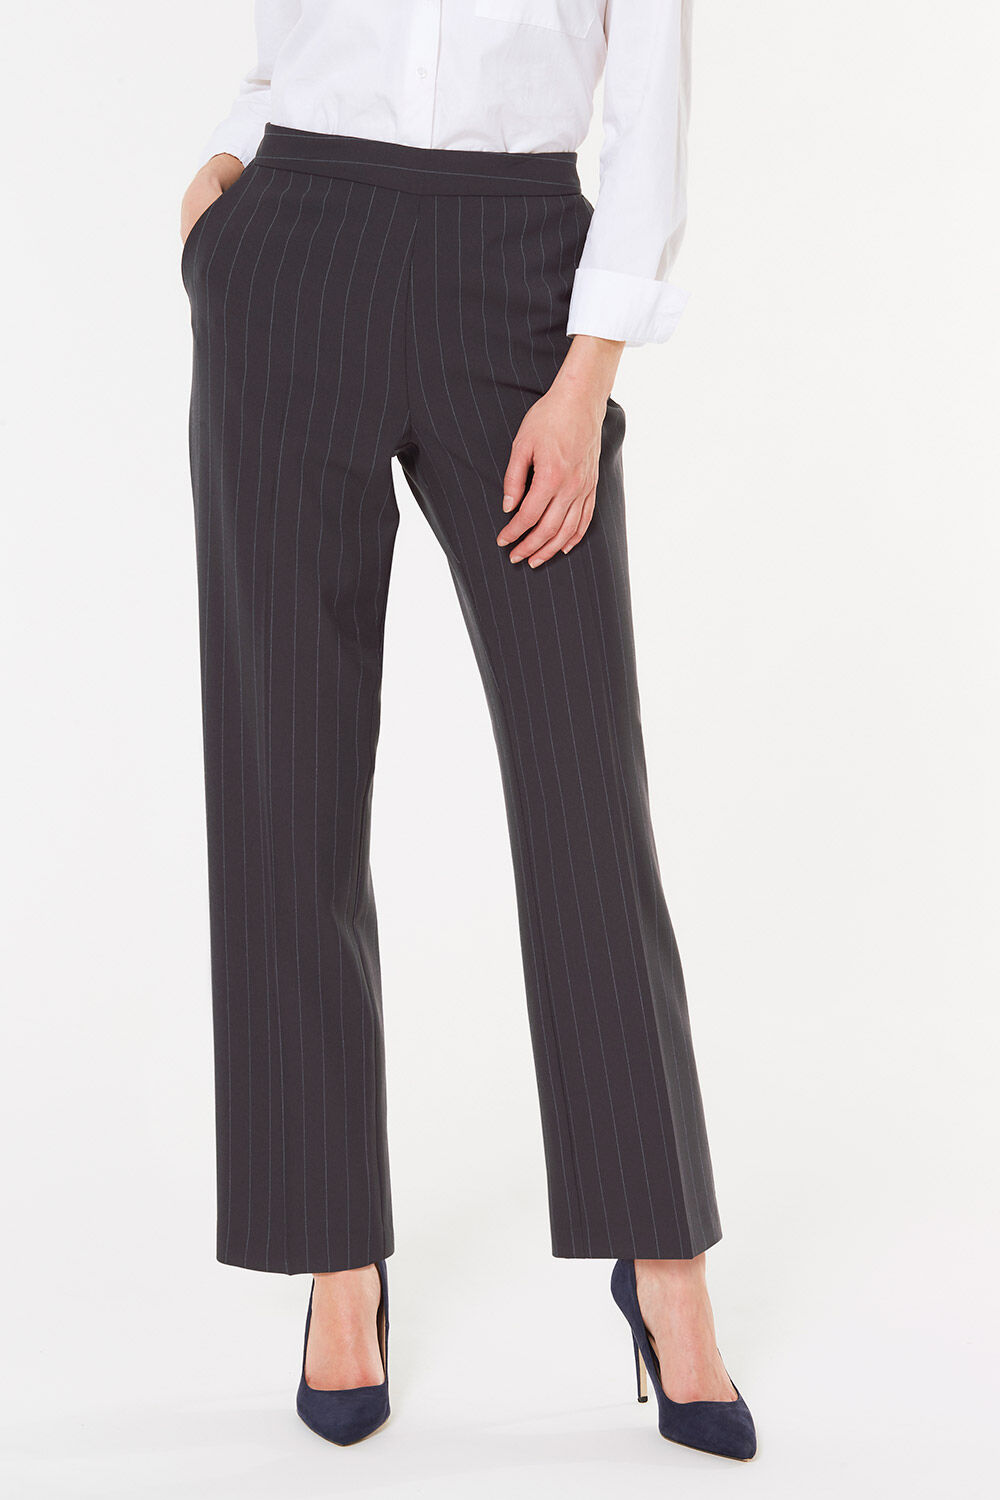 Bonmarche Workwear Straight Leg Stripe Pull On Trouser - Navy, Size: 16